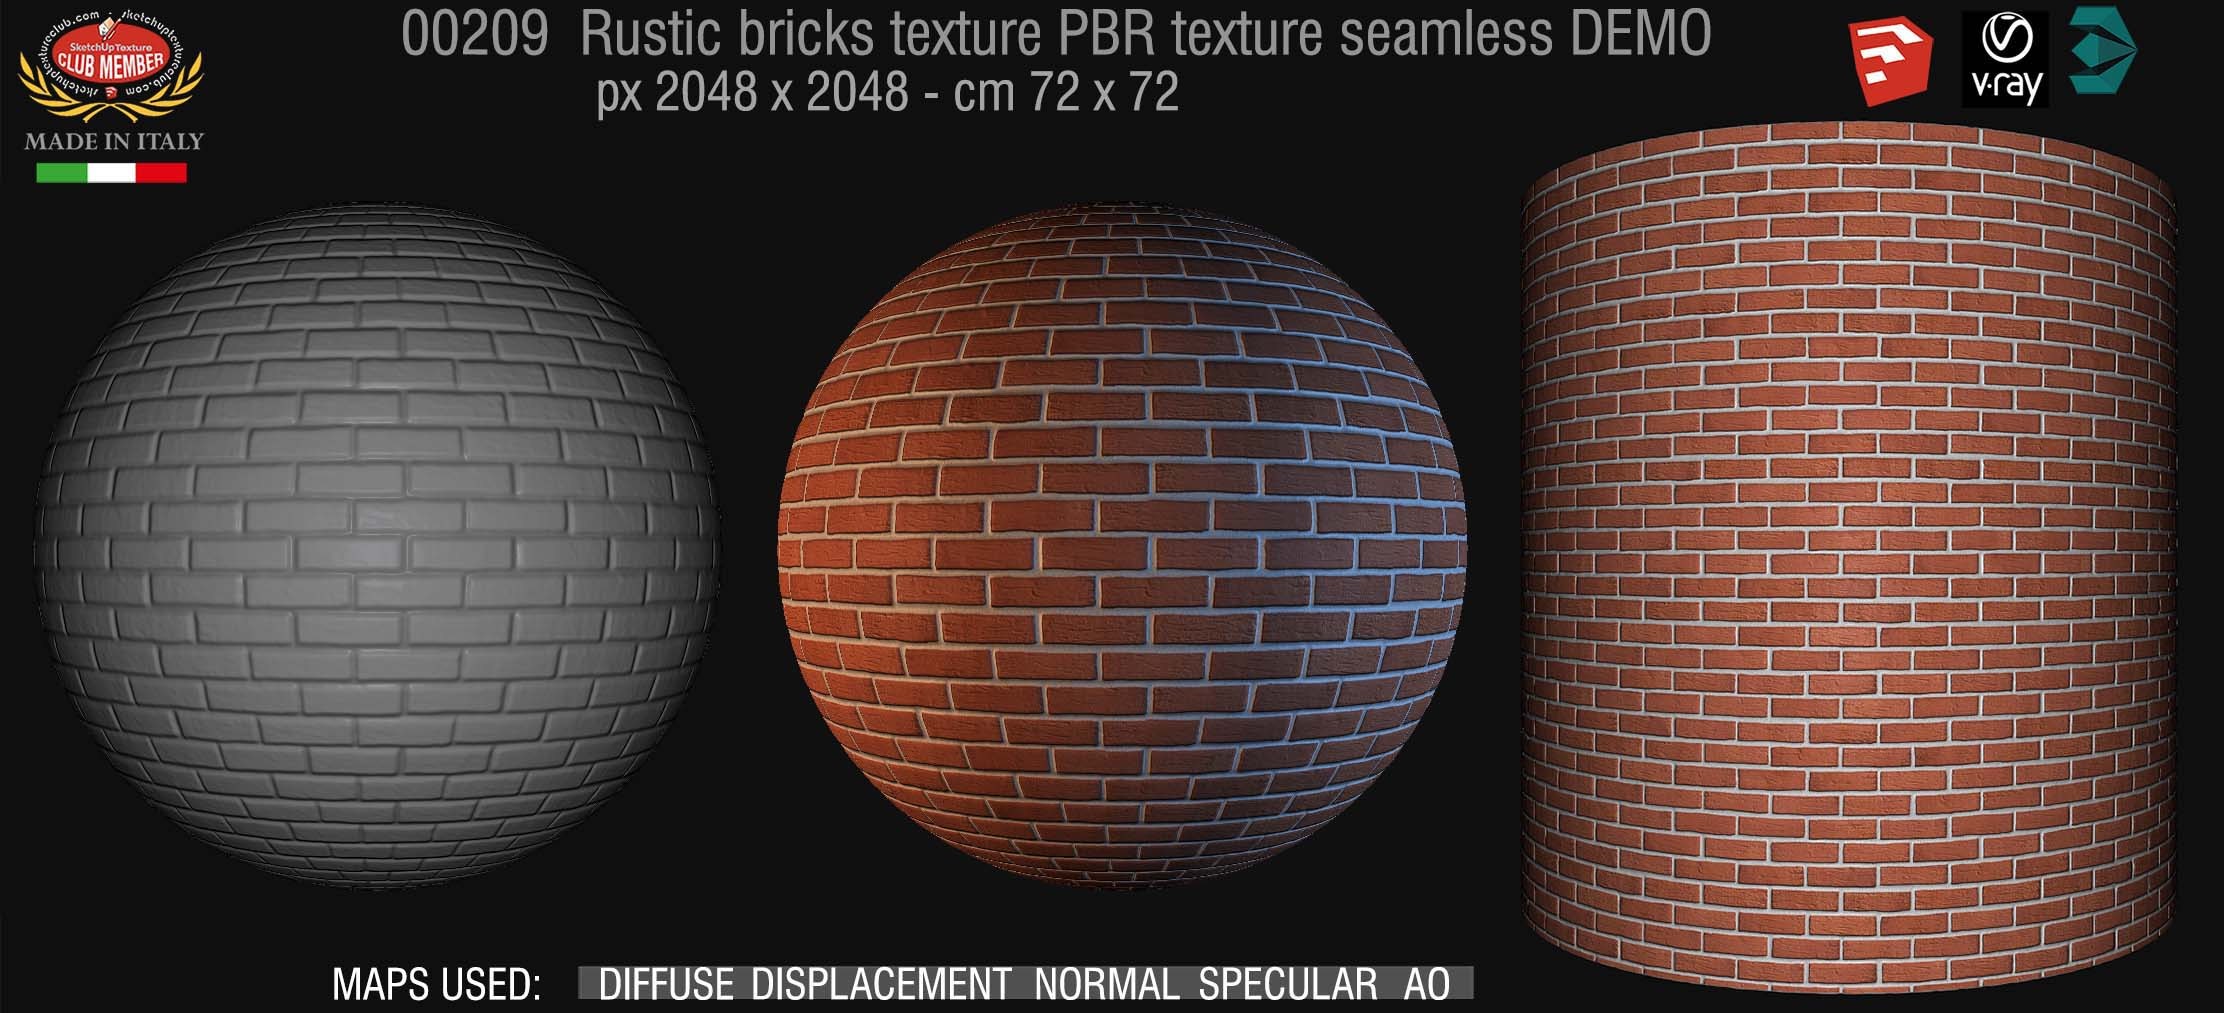 00209 rustic bricks PBR texture seamless DEMO